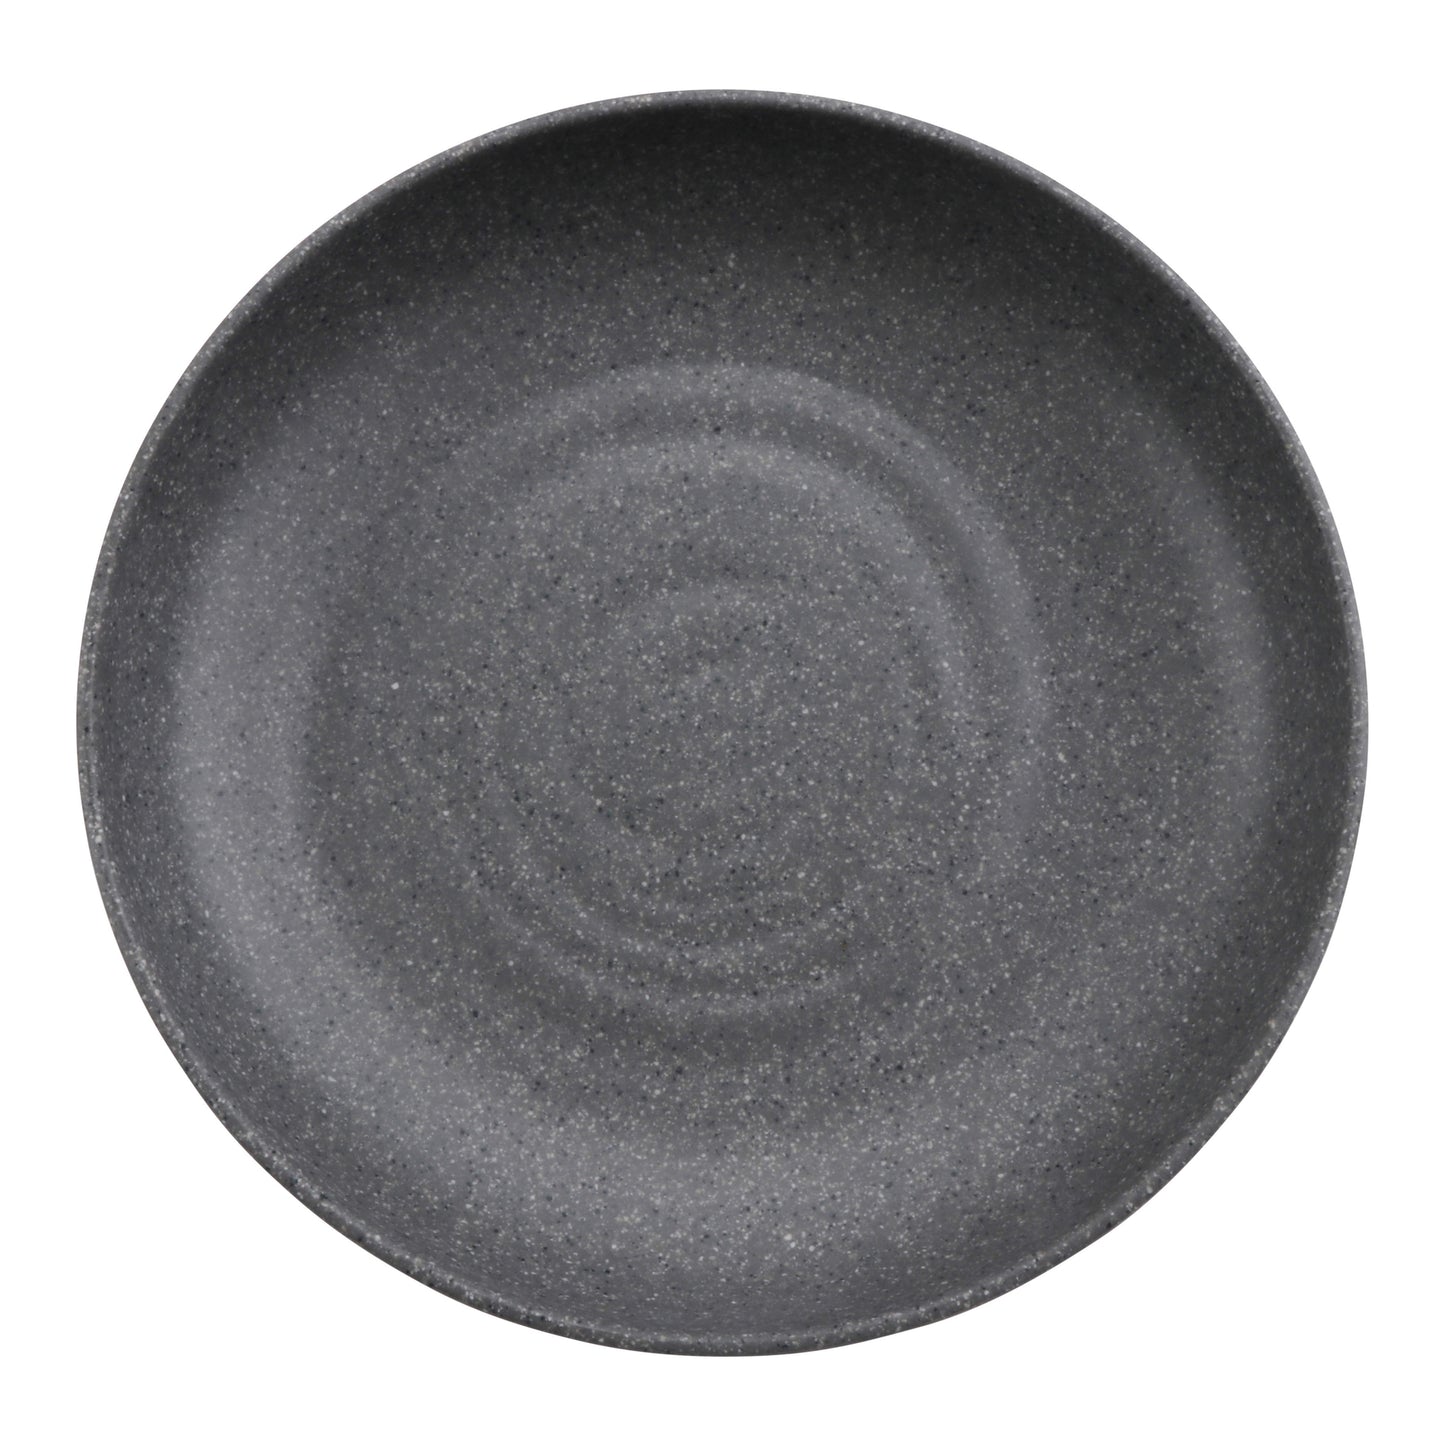 56 oz infuse stone grey round mrlamine bowl (medium), 9.5"L x 9.5"W x 2"H, GET, cheforward